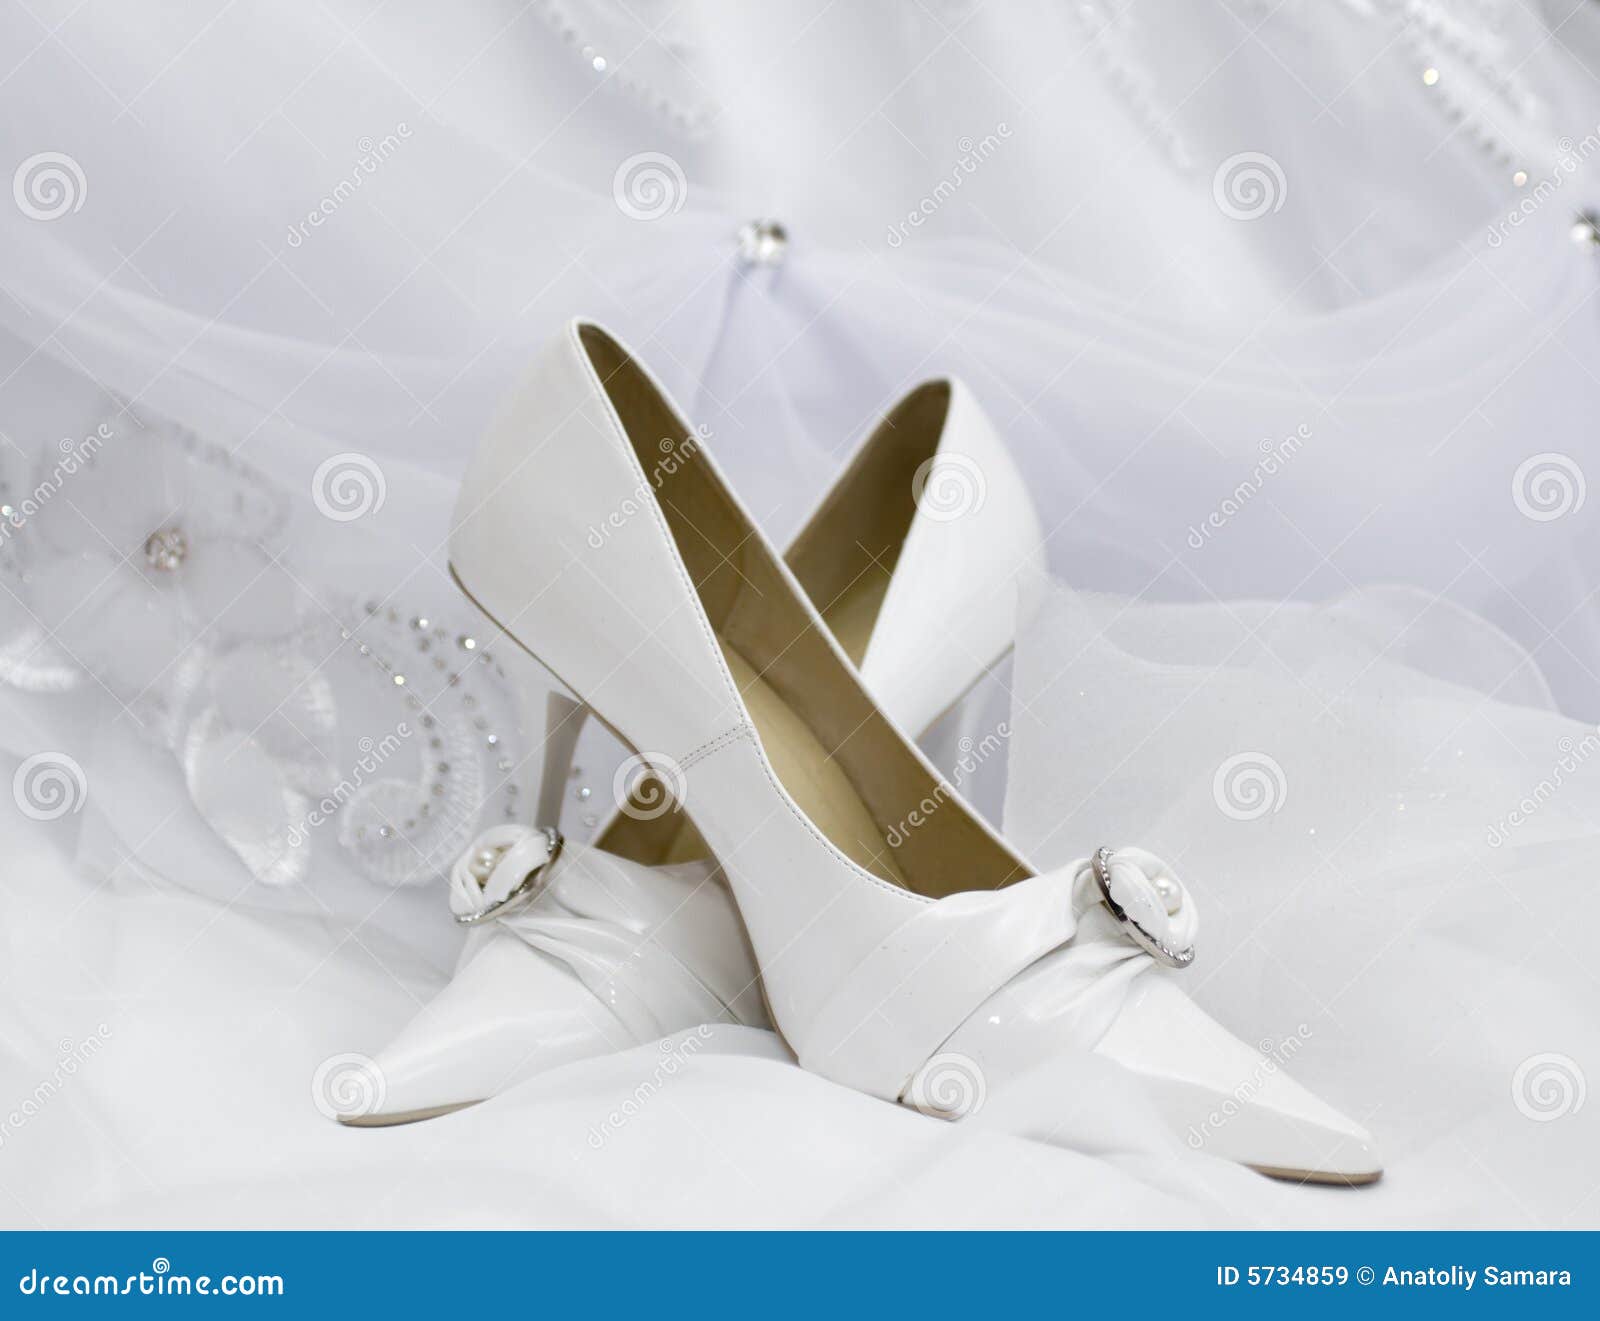 Wedding Shoes On Bridal Dress Royalty Free Stock Images - Image: 5734859